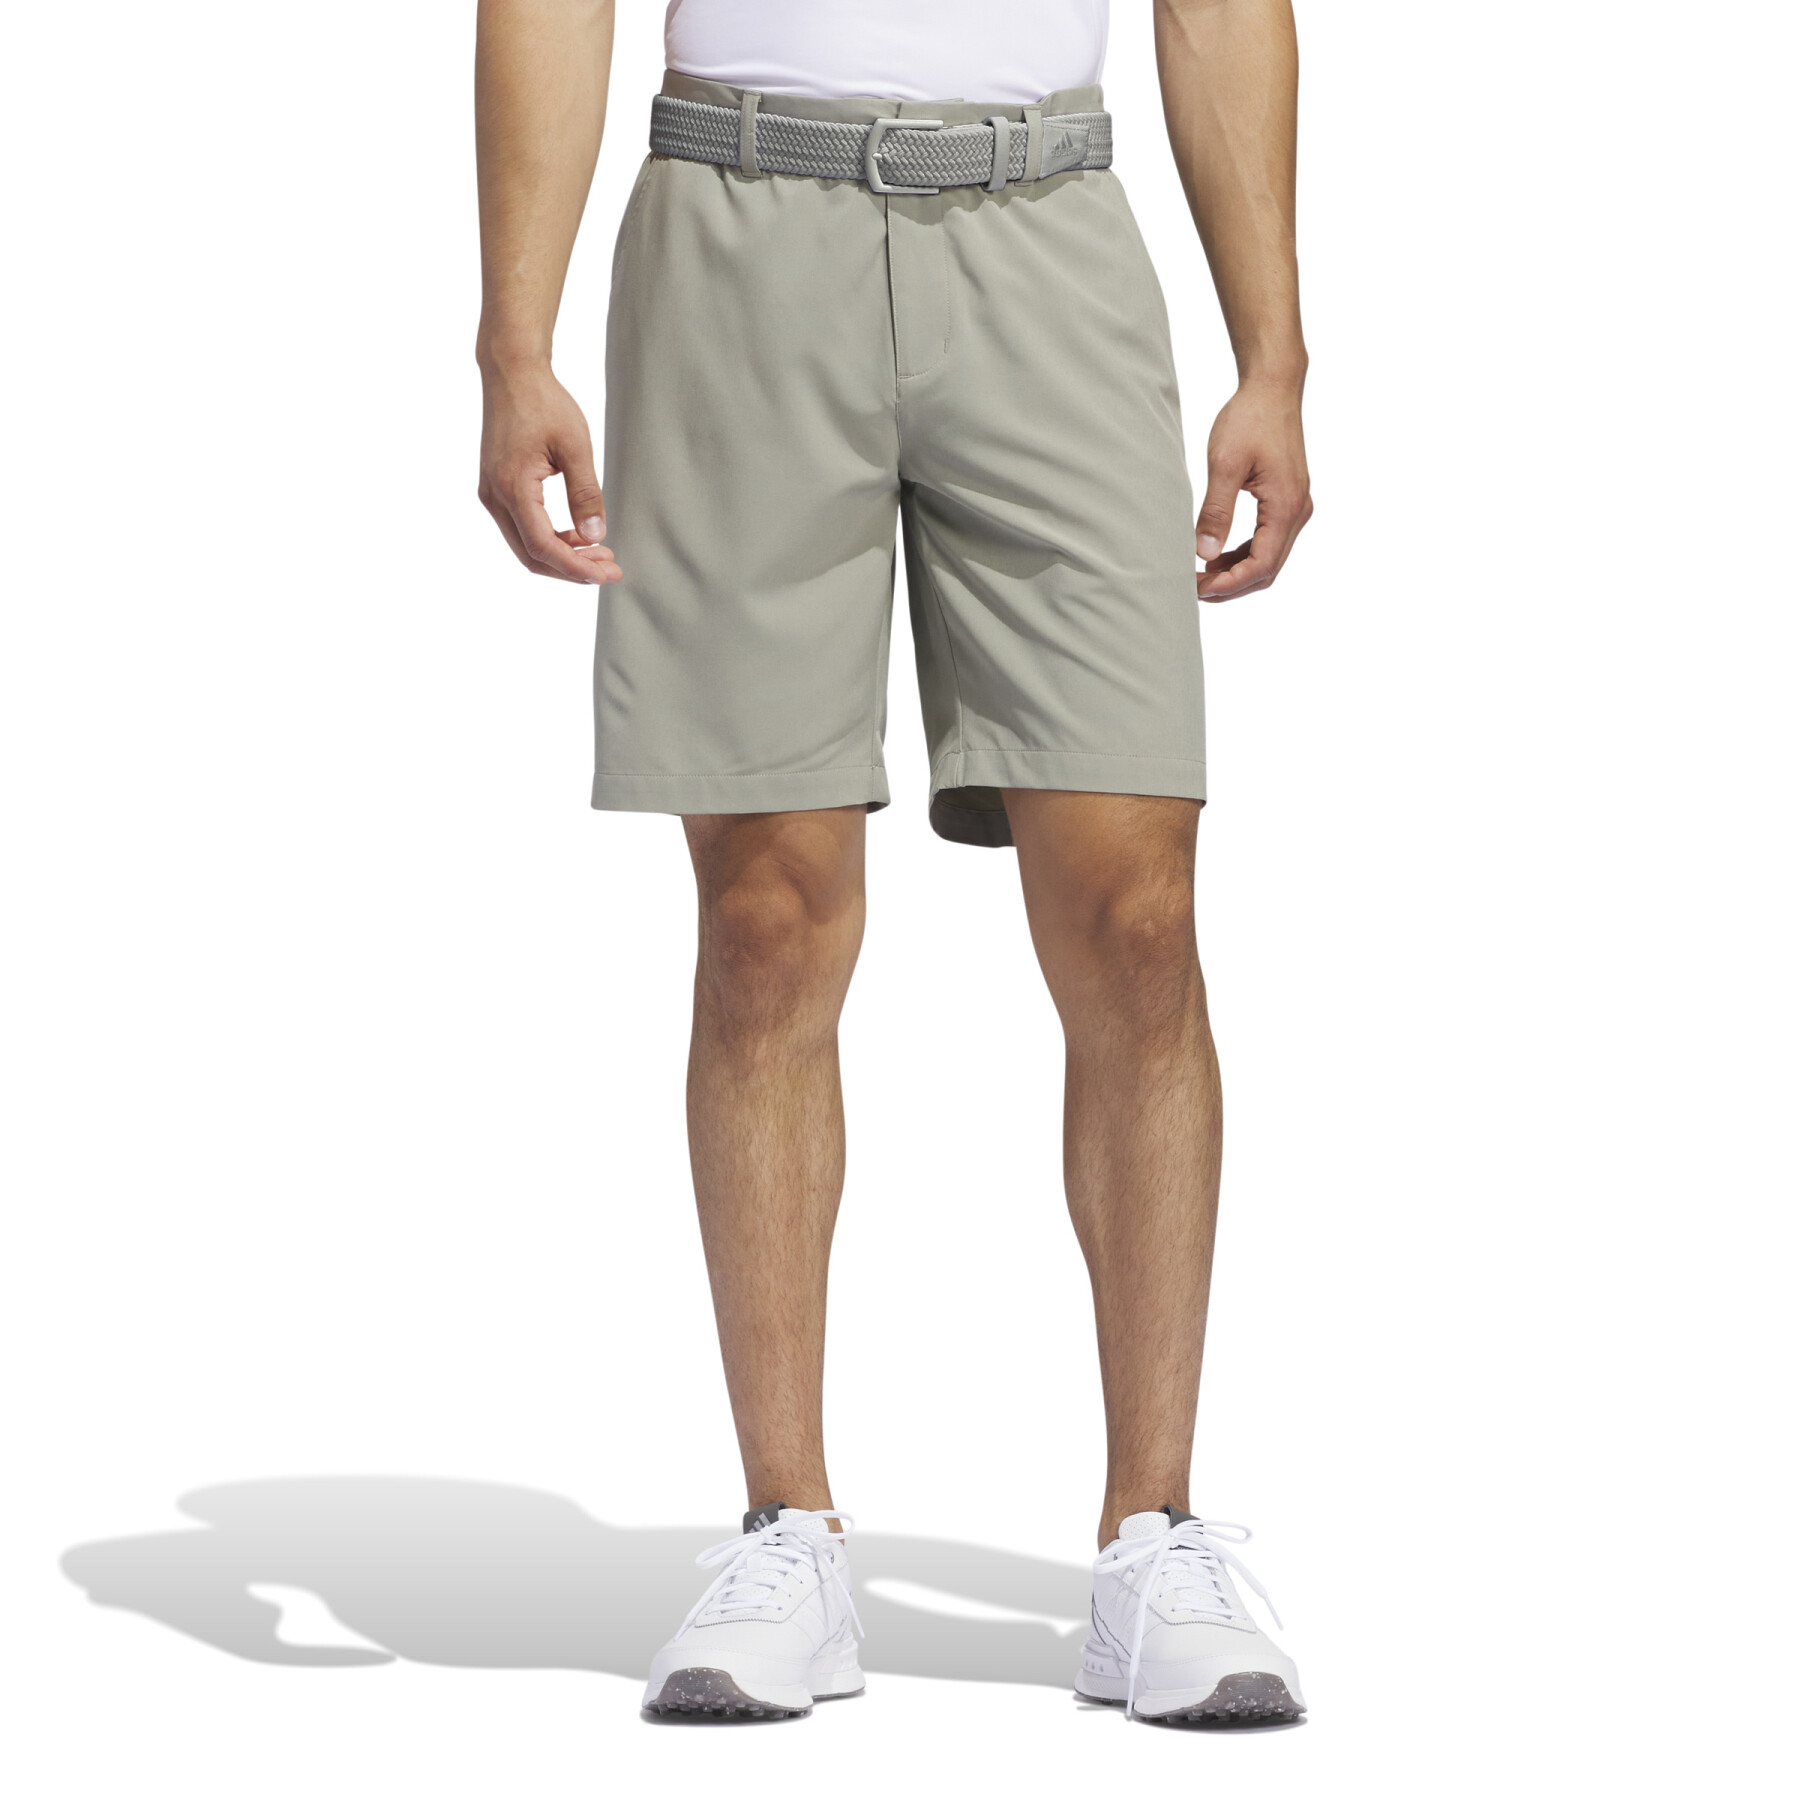 Bermuda shorts 8,5 centimeter adidas Ultimate